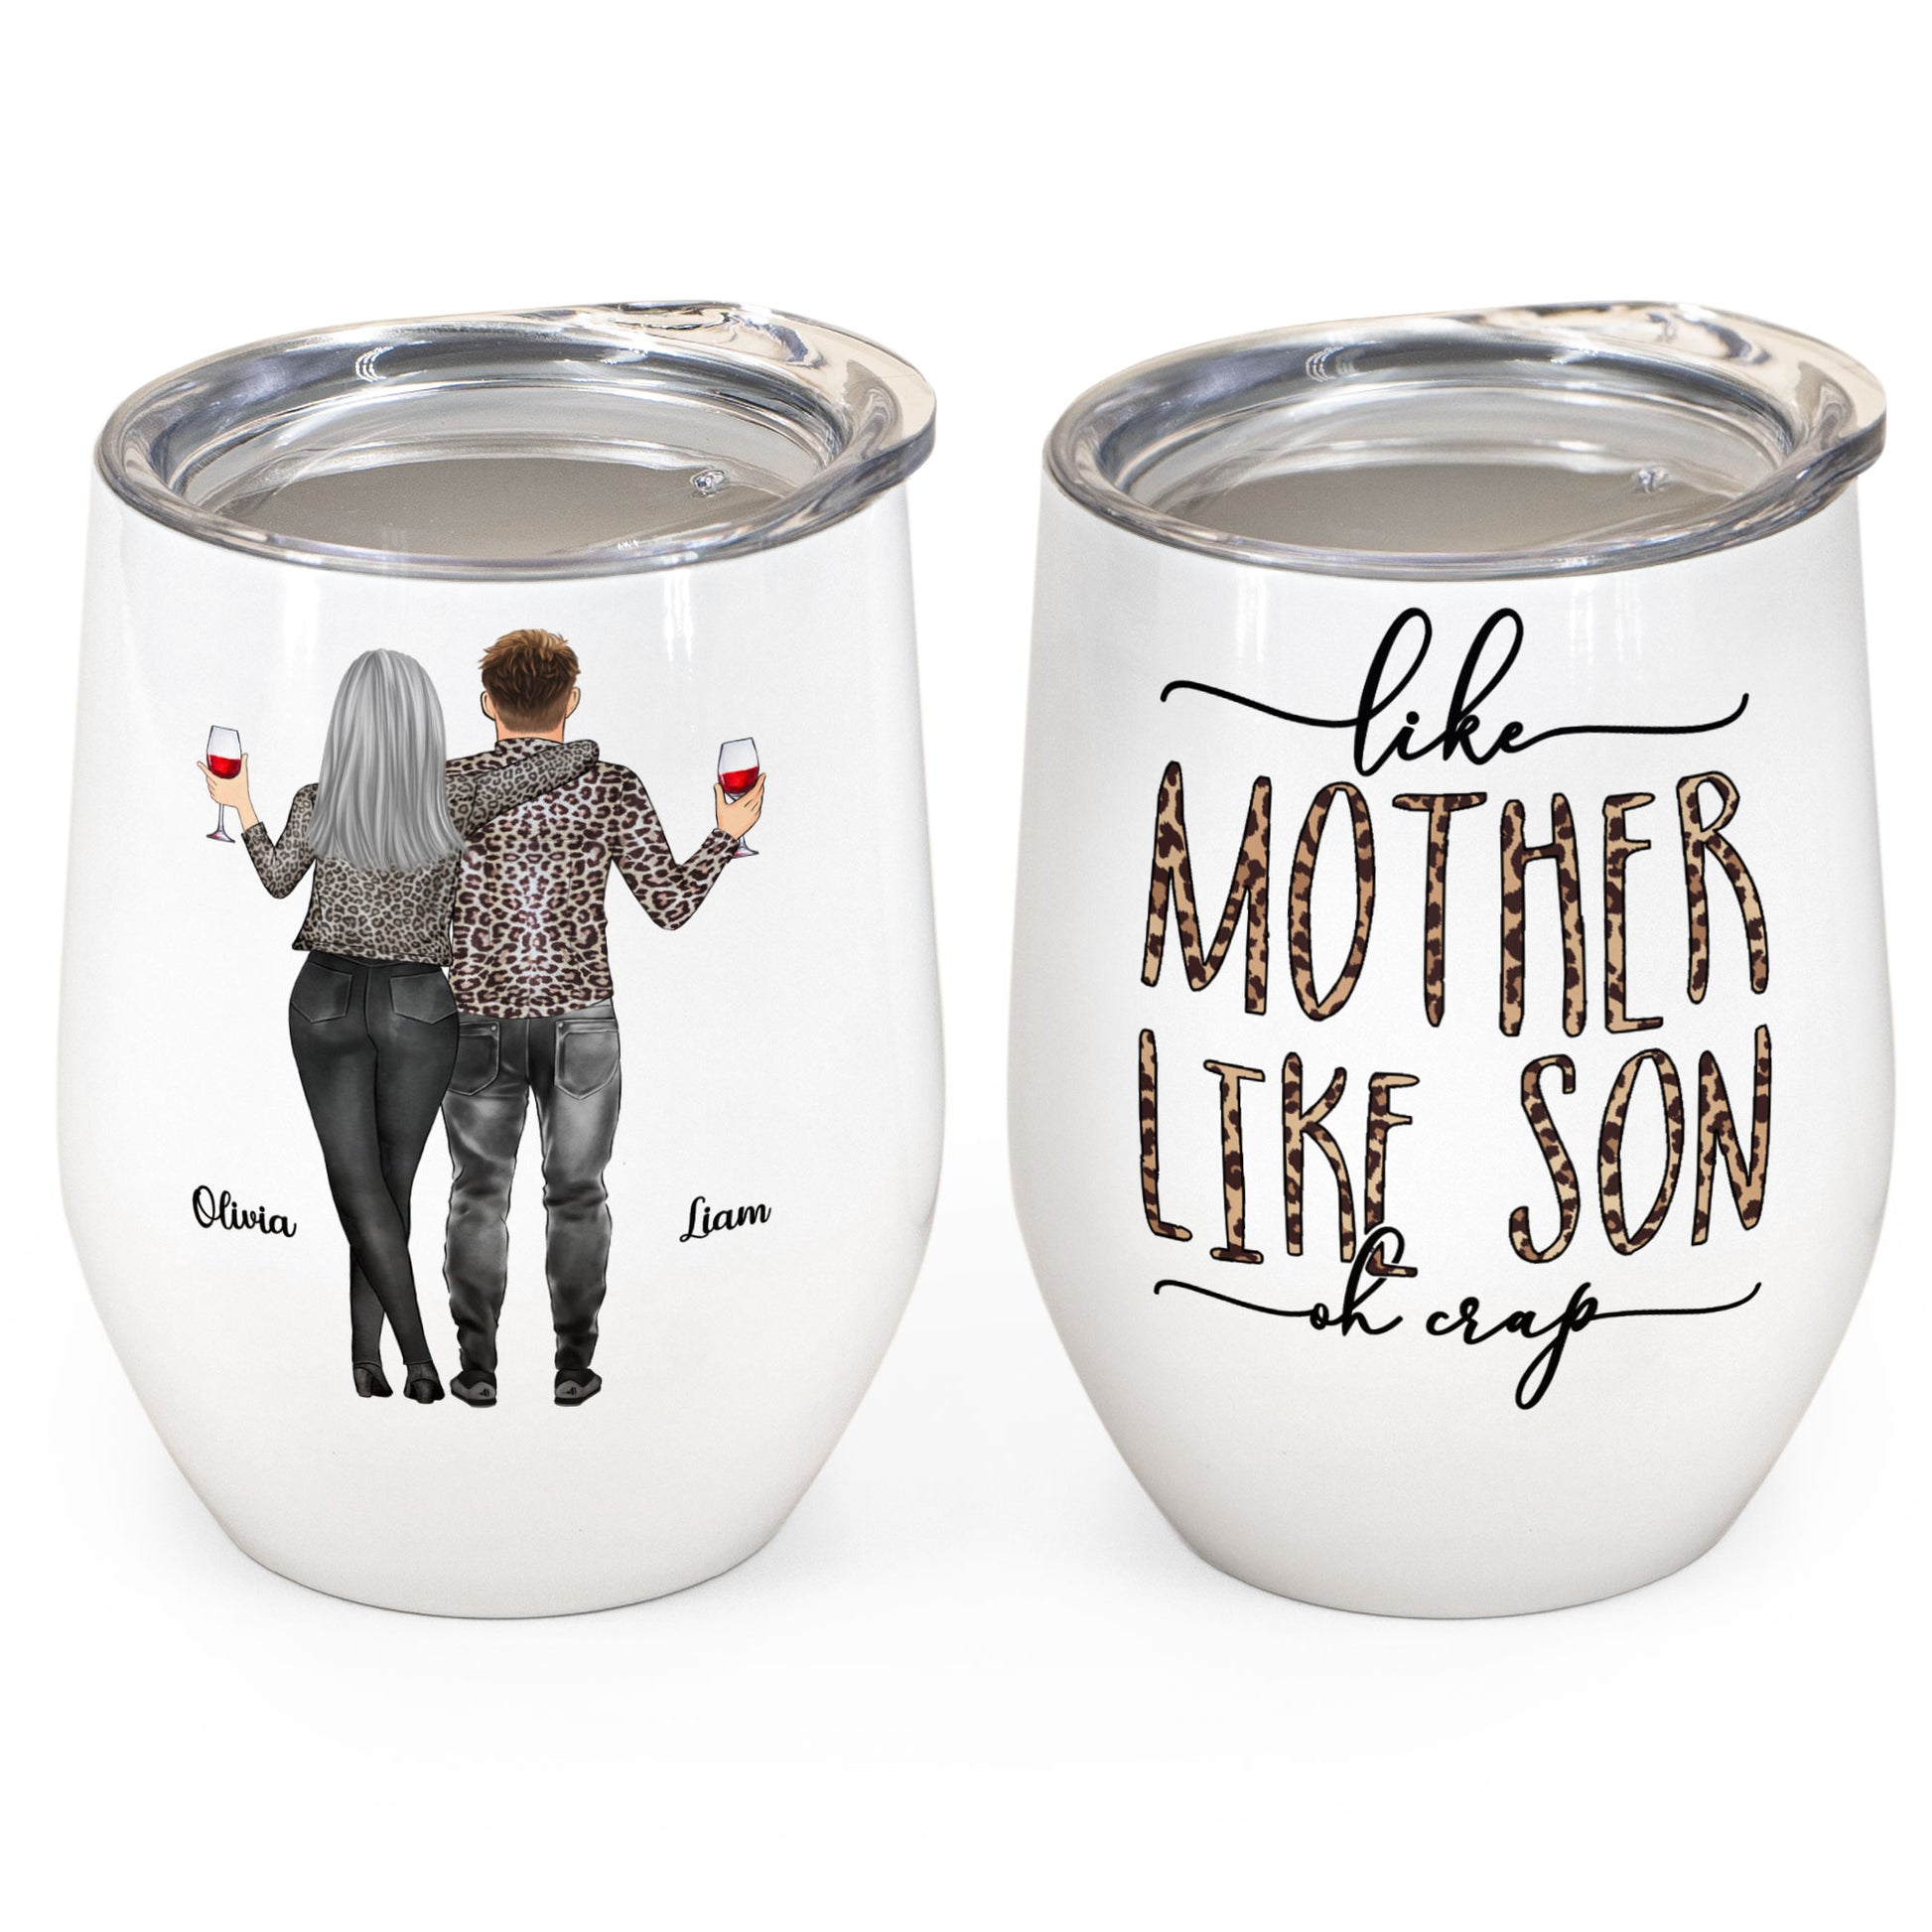 Mom Of Boys - Personalized Wine Tumbler - Mom And Kids Back – Macorner